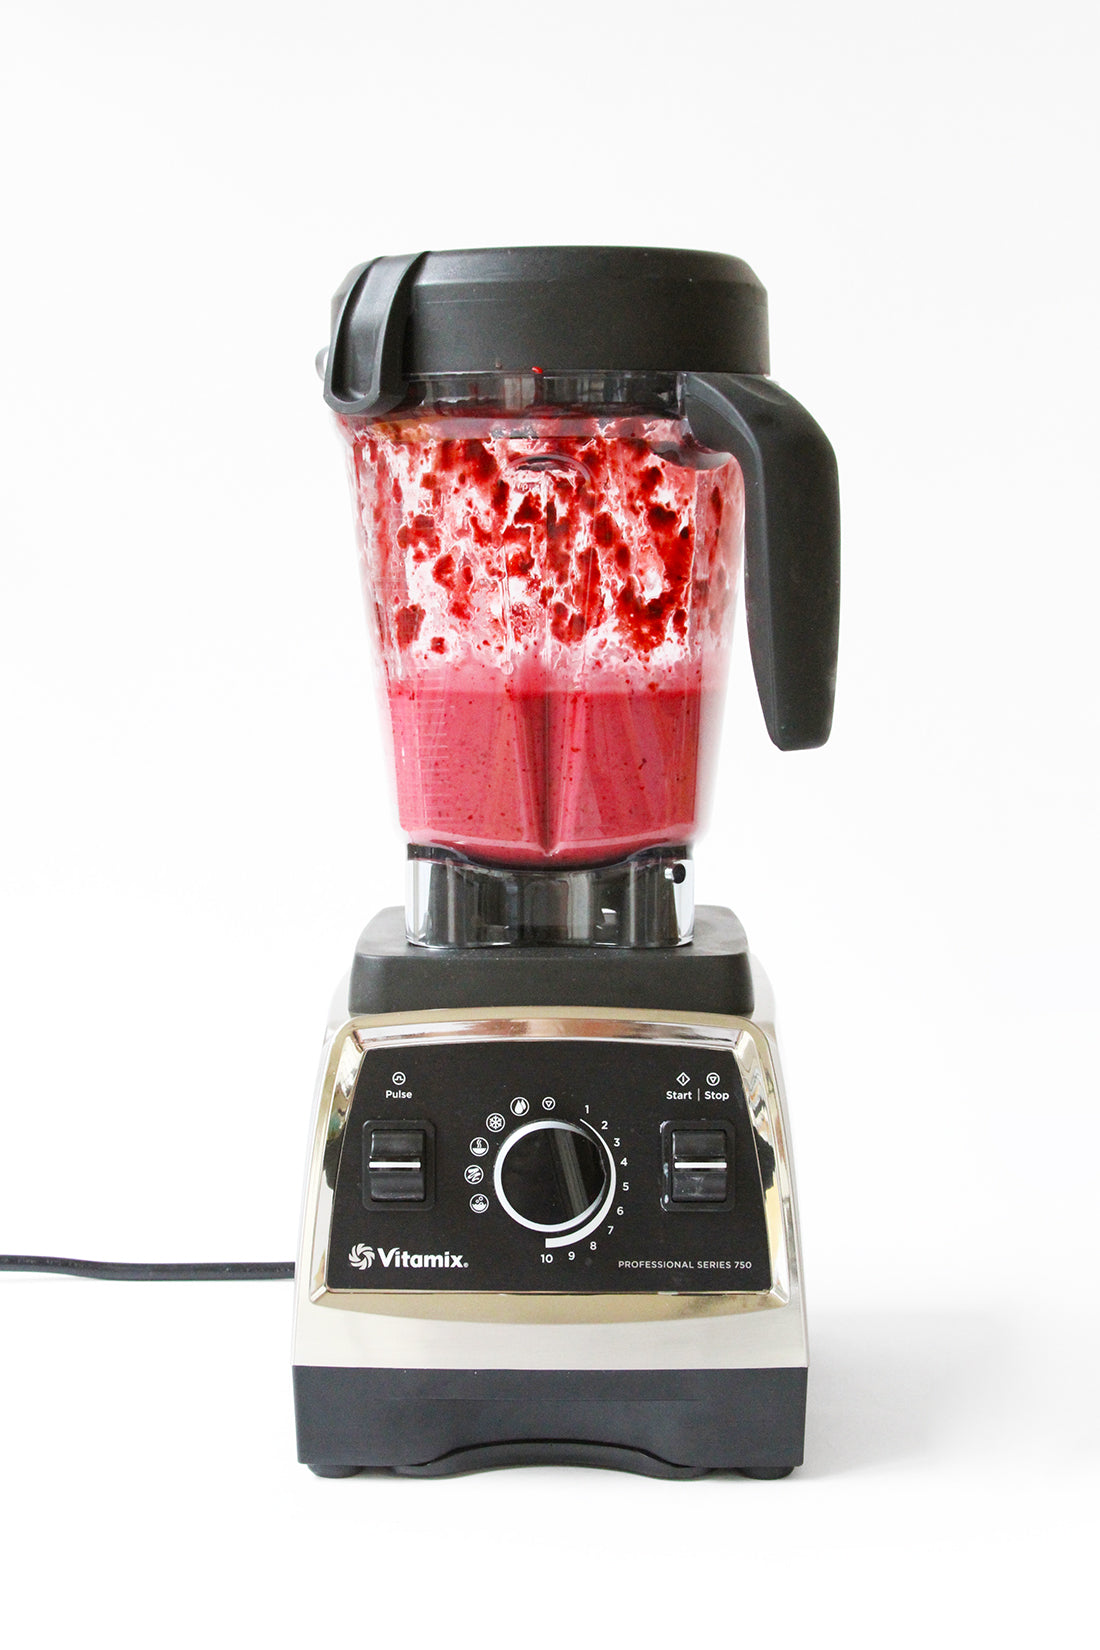 Image of blender with red glaze for Miss Jones Baking Co Blackberry Buttermilk Donuts